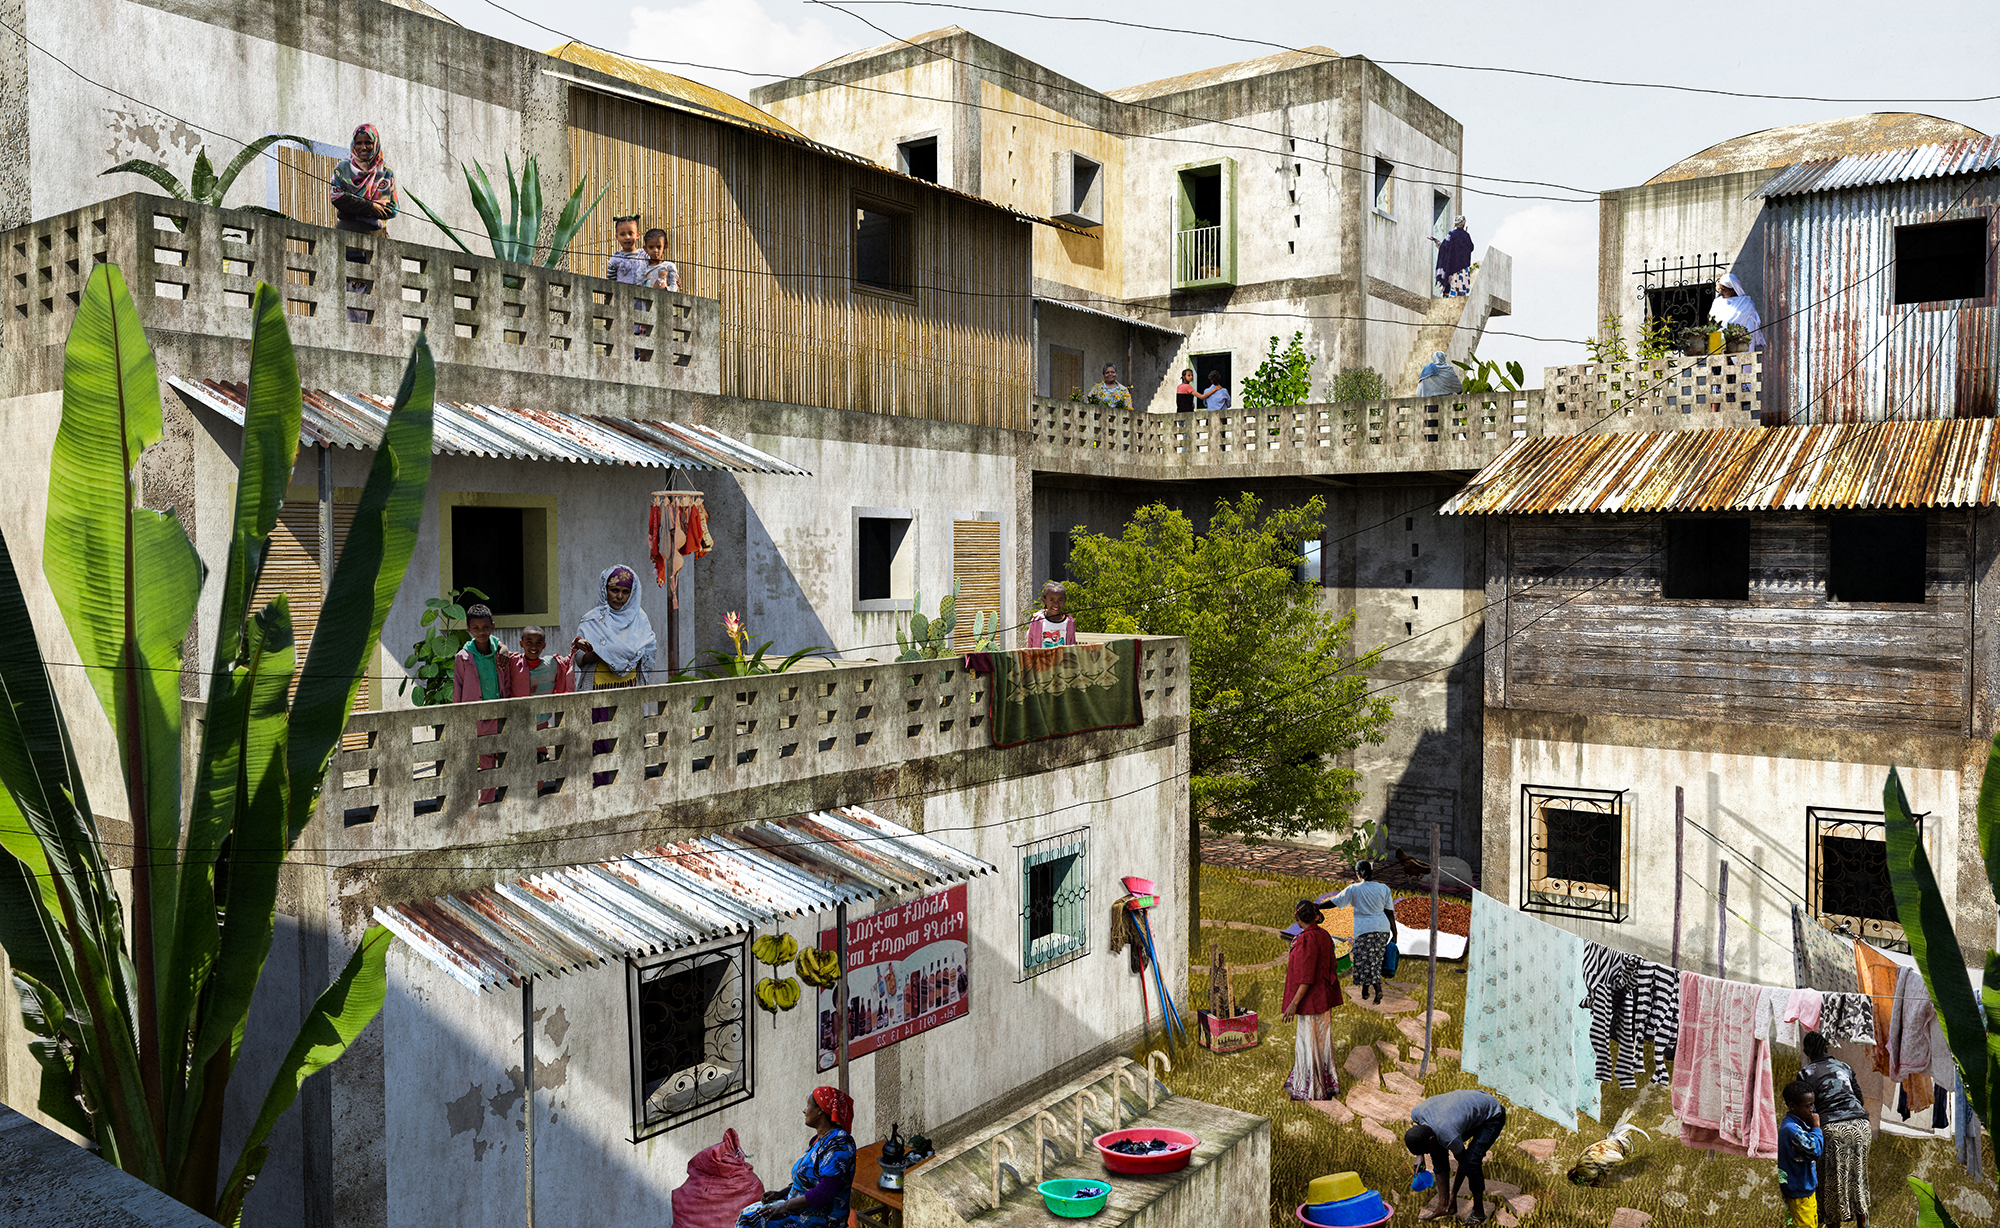 Rhizome: a growing horizontal stem of affordable housing in Menen, Addis Ababa